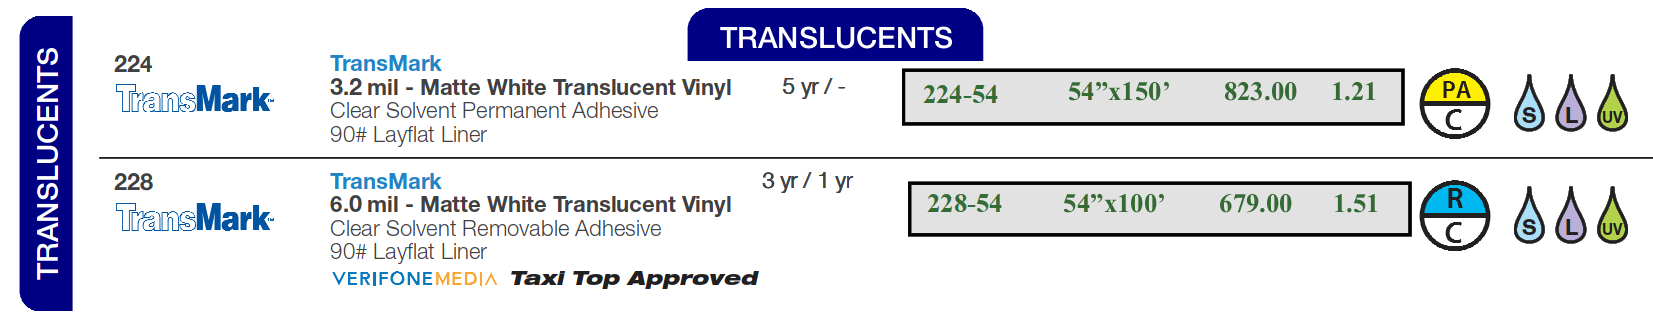 Concept translucents 2023 - GF Translucent Vinyl Printable